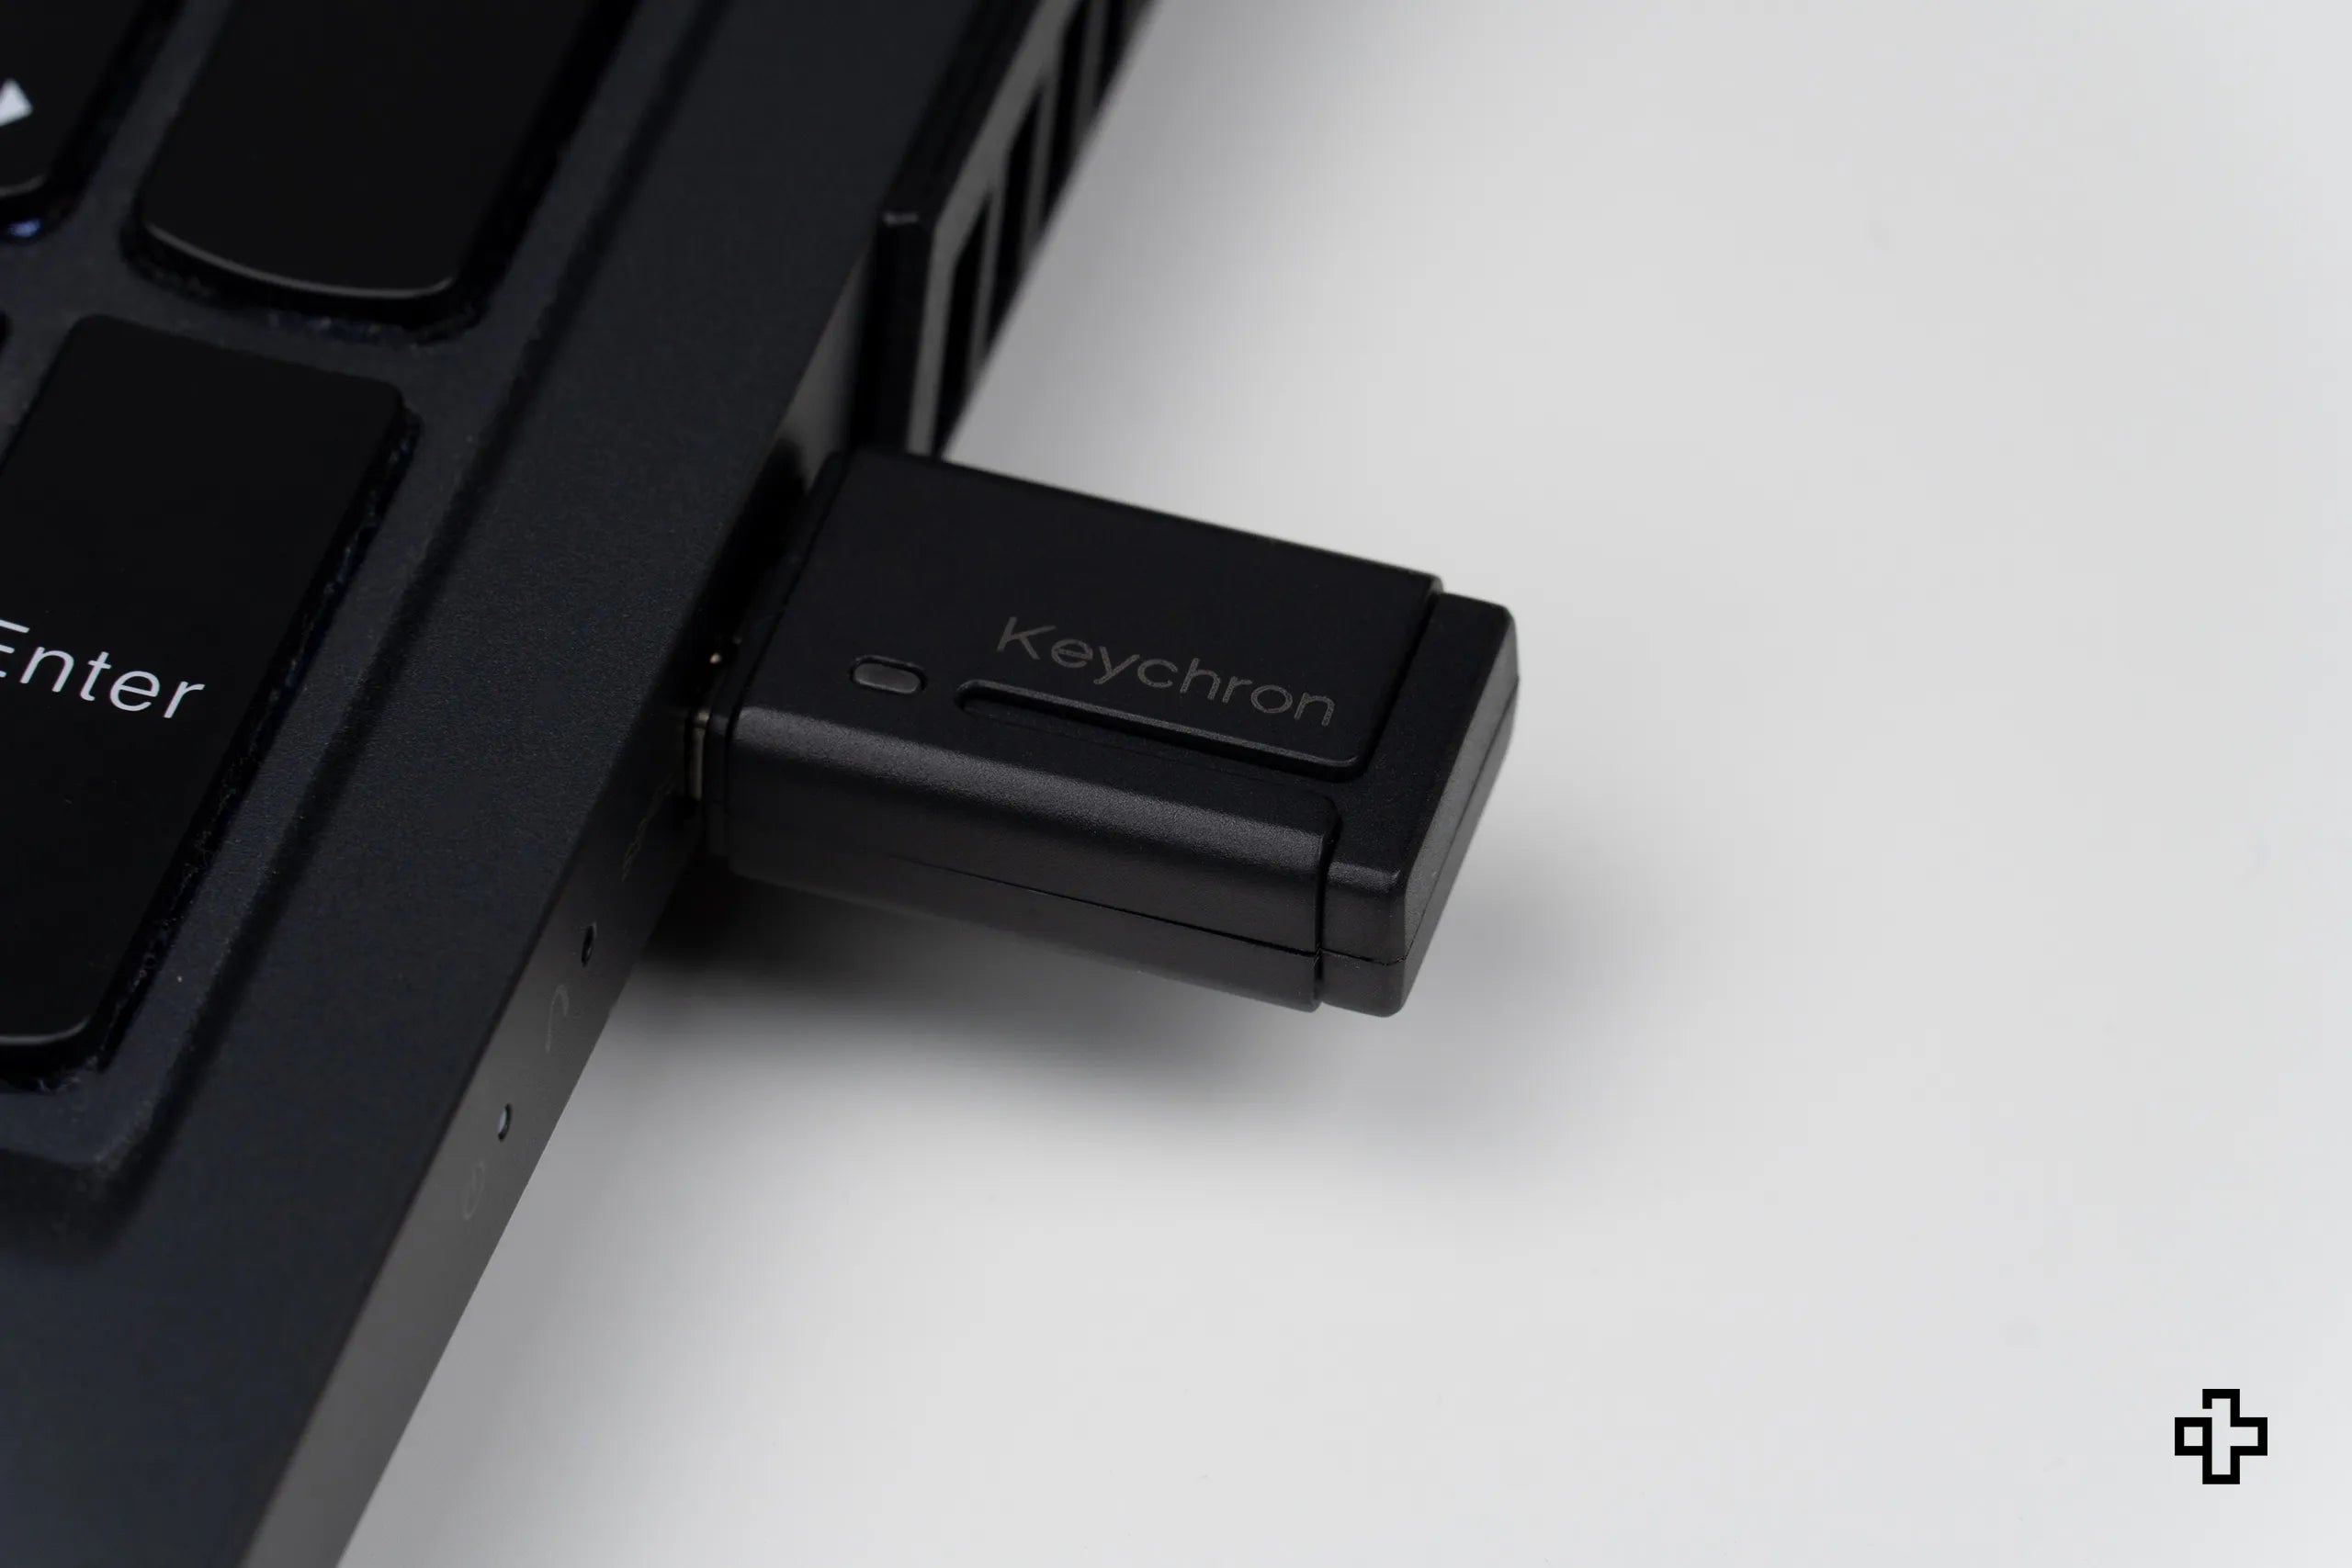 Keychron USB-Bluetooth-Adapter für Windows 5.0